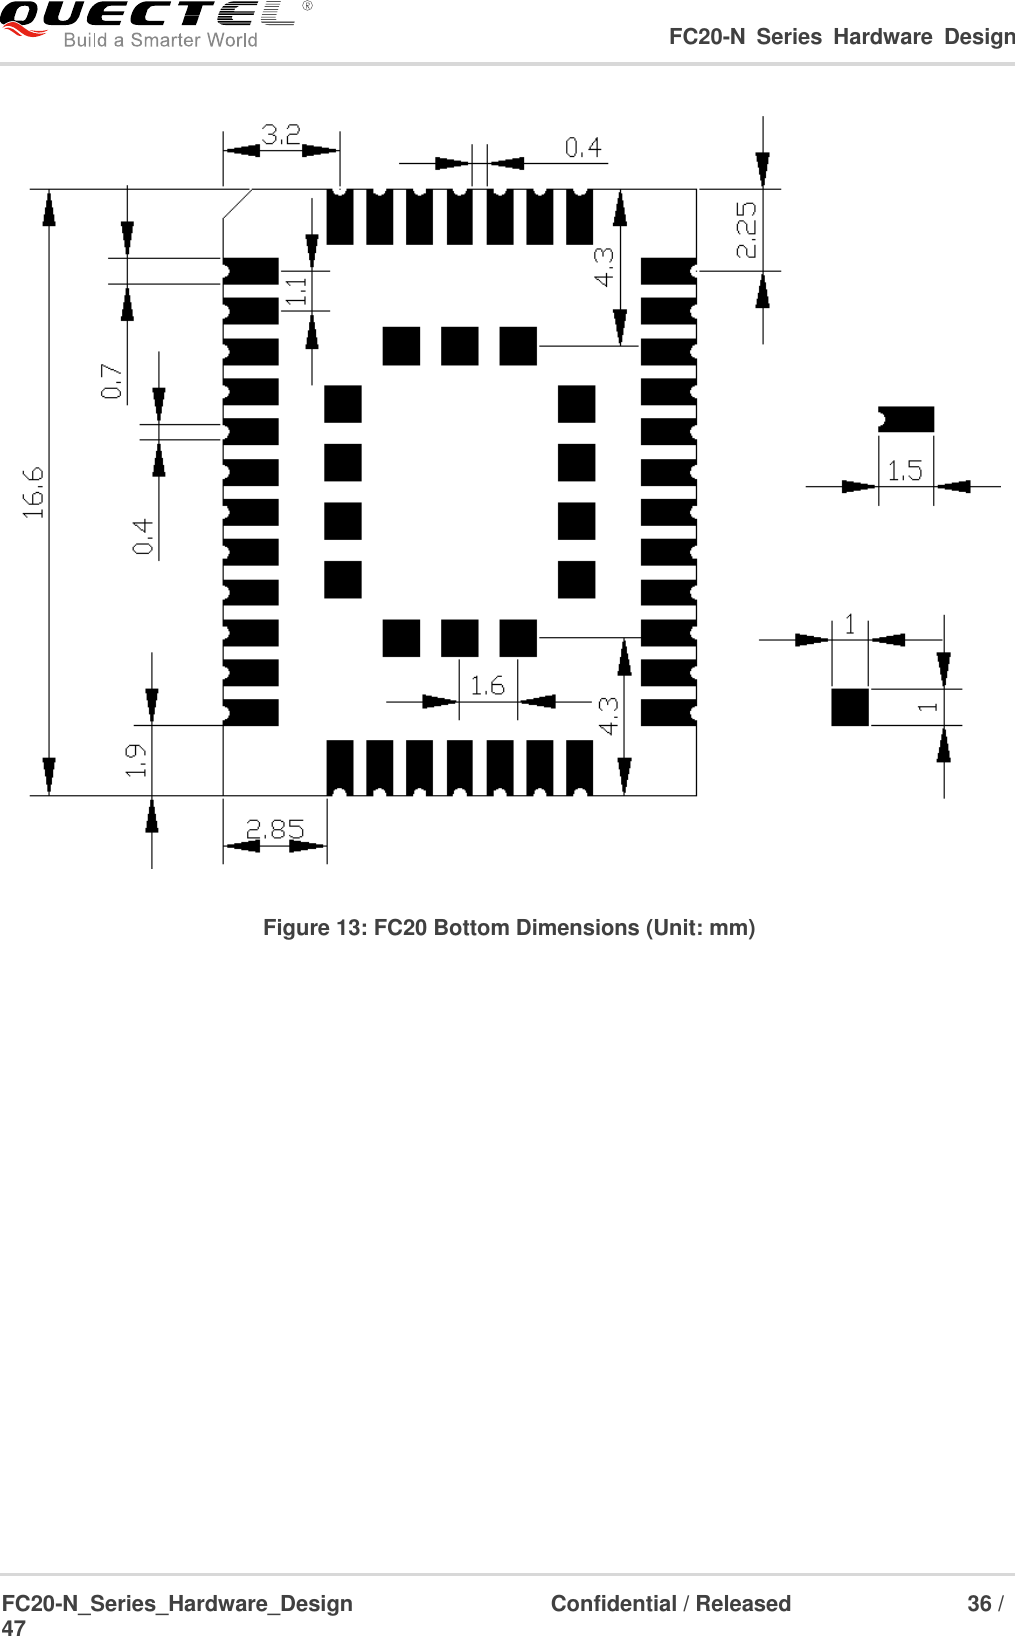                                                                                                                                     FC20-N  Series  Hardware  Design  FC20-N_Series_Hardware_Design                                Confidential / Released                    36 / 47     Figure 13: FC20 Bottom Dimensions (Unit: mm)      